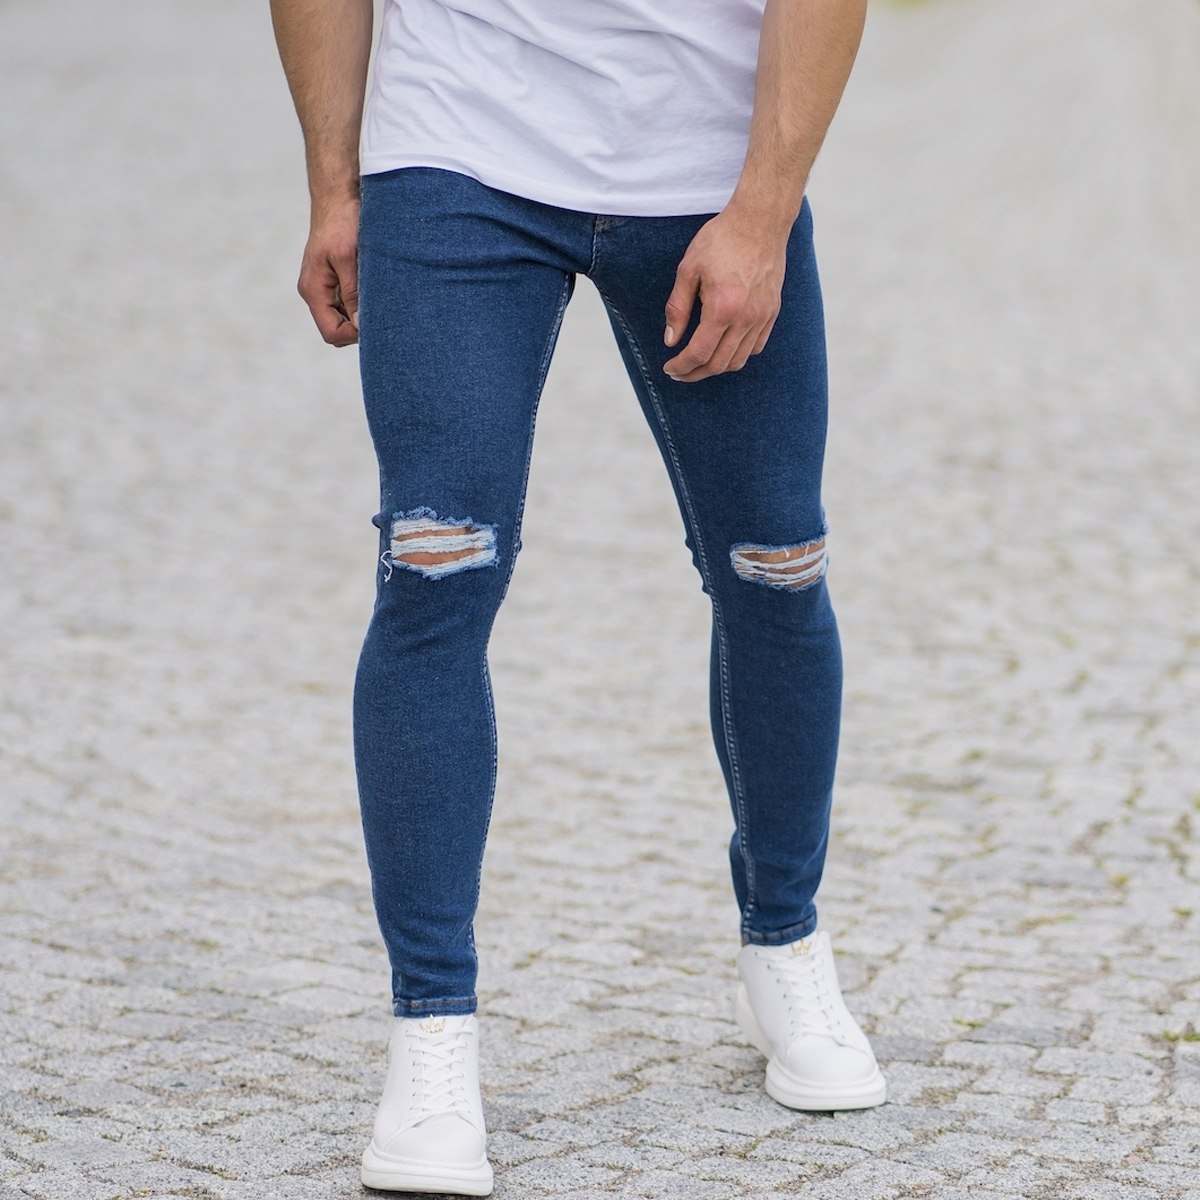 Herren Skinny Jeans mit Rissen in dunkelblau - 1